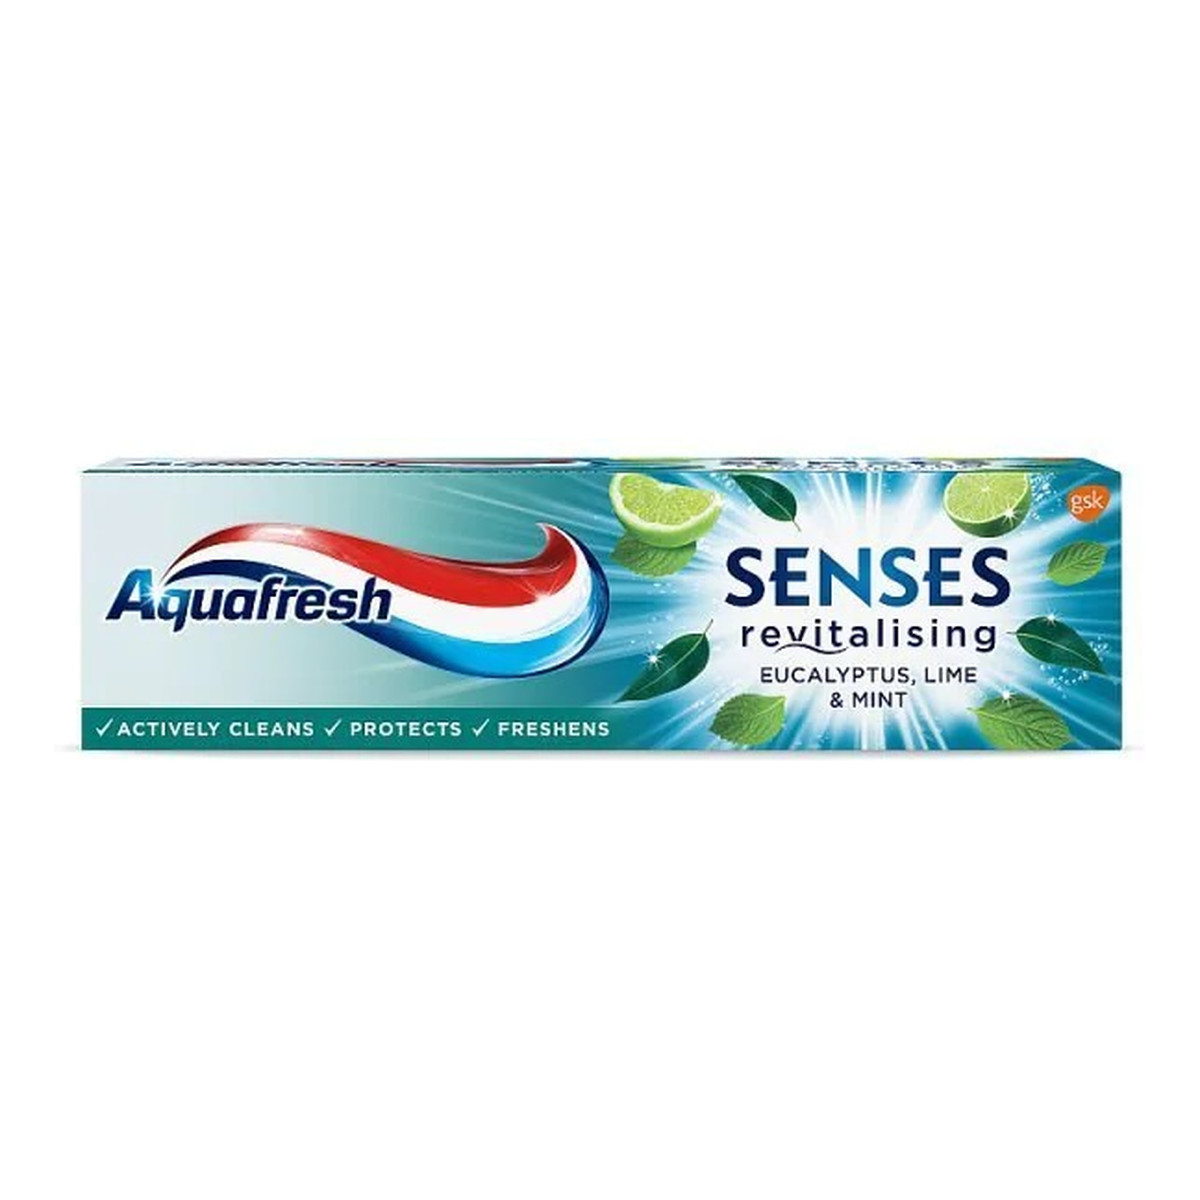 Aquafresh Senses revitalising toothpaste rewitalizująca pasta do zębów eucalyptus & lime & mint 75ml